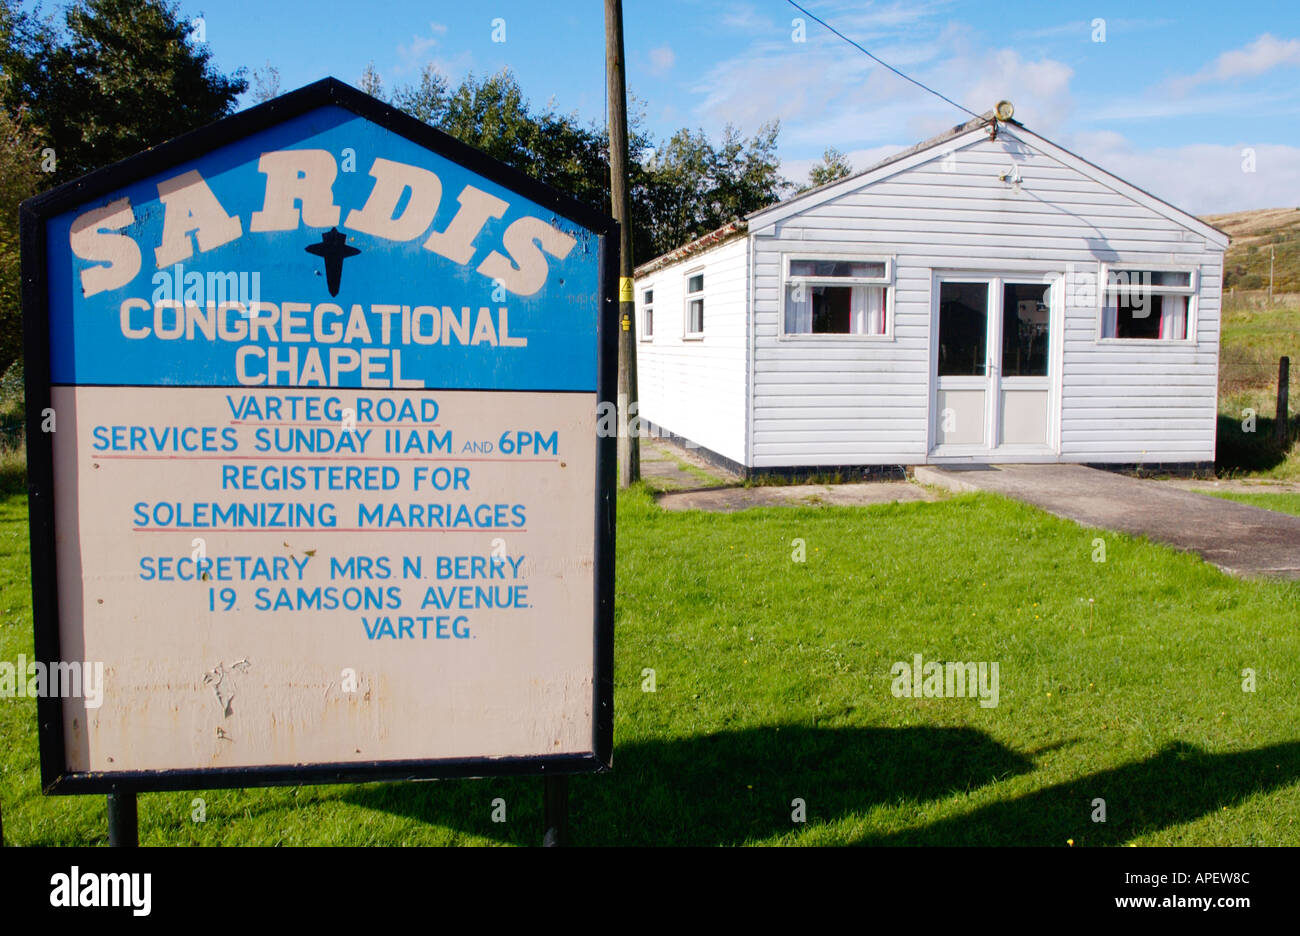 Notice board outside Sardis Congregational Chapel at Varteg South Wales Valleys UK Stock Photo